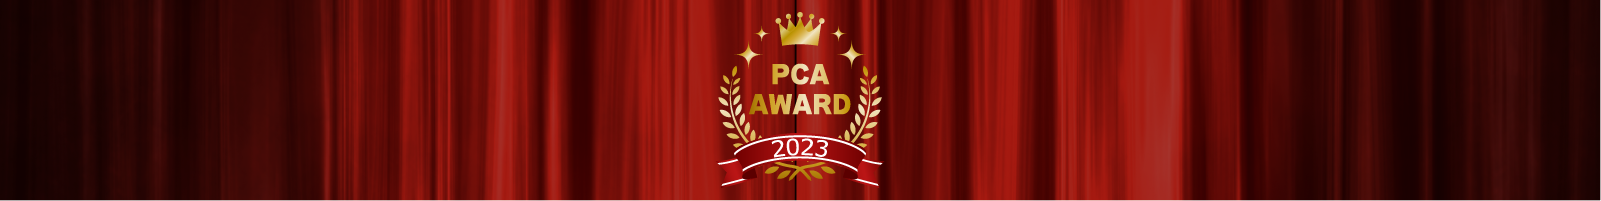 pca_award